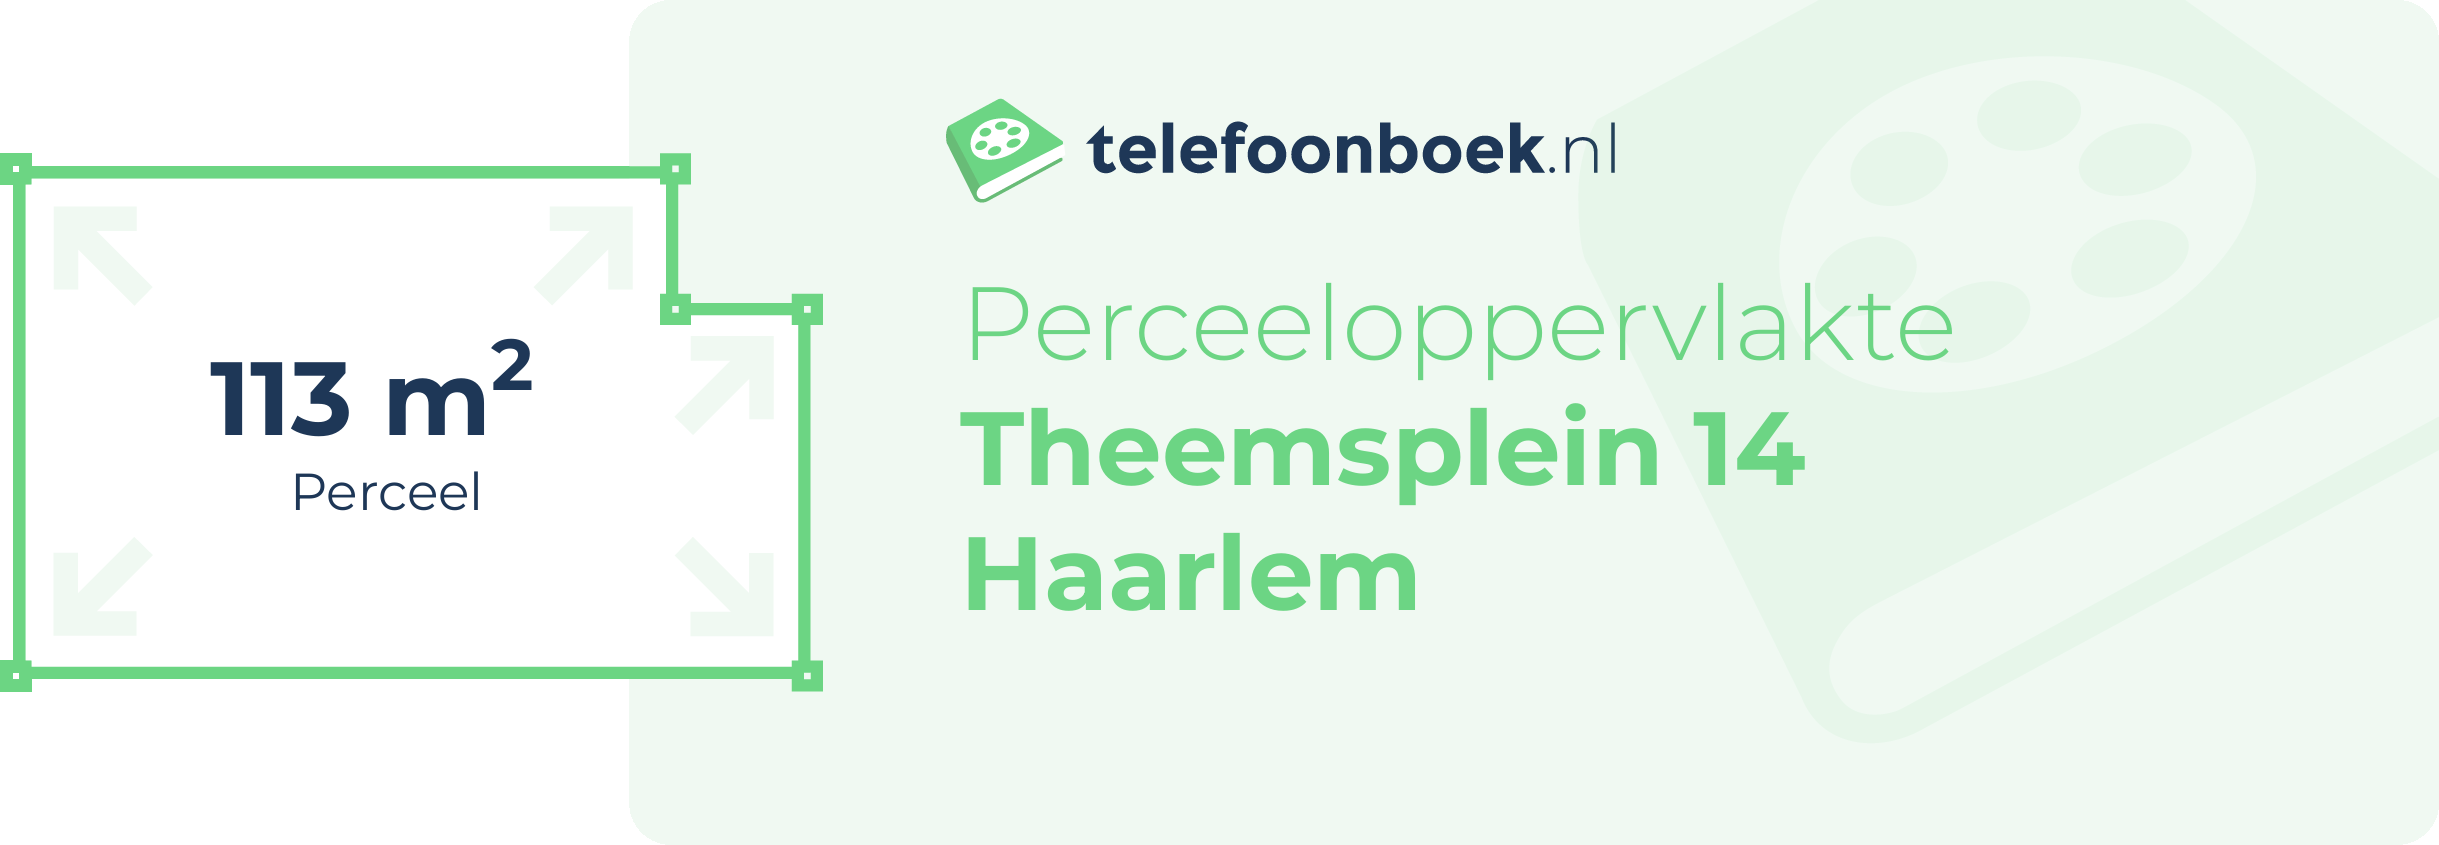 Perceeloppervlakte Theemsplein 14 Haarlem